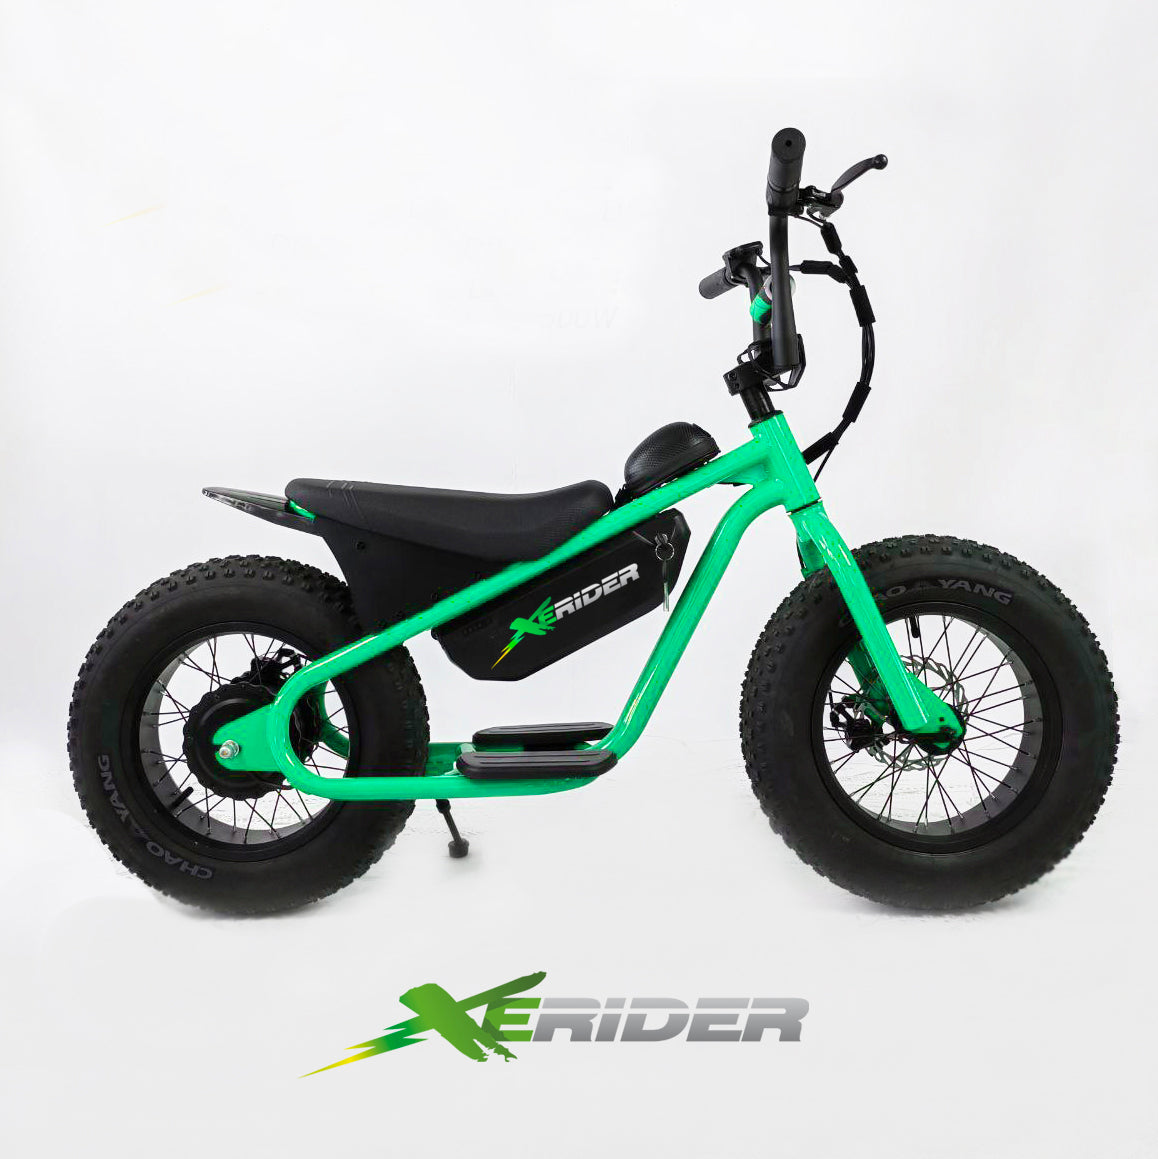 MINI FAT BIKE XERIDER Electric motorcycle/balance bike 